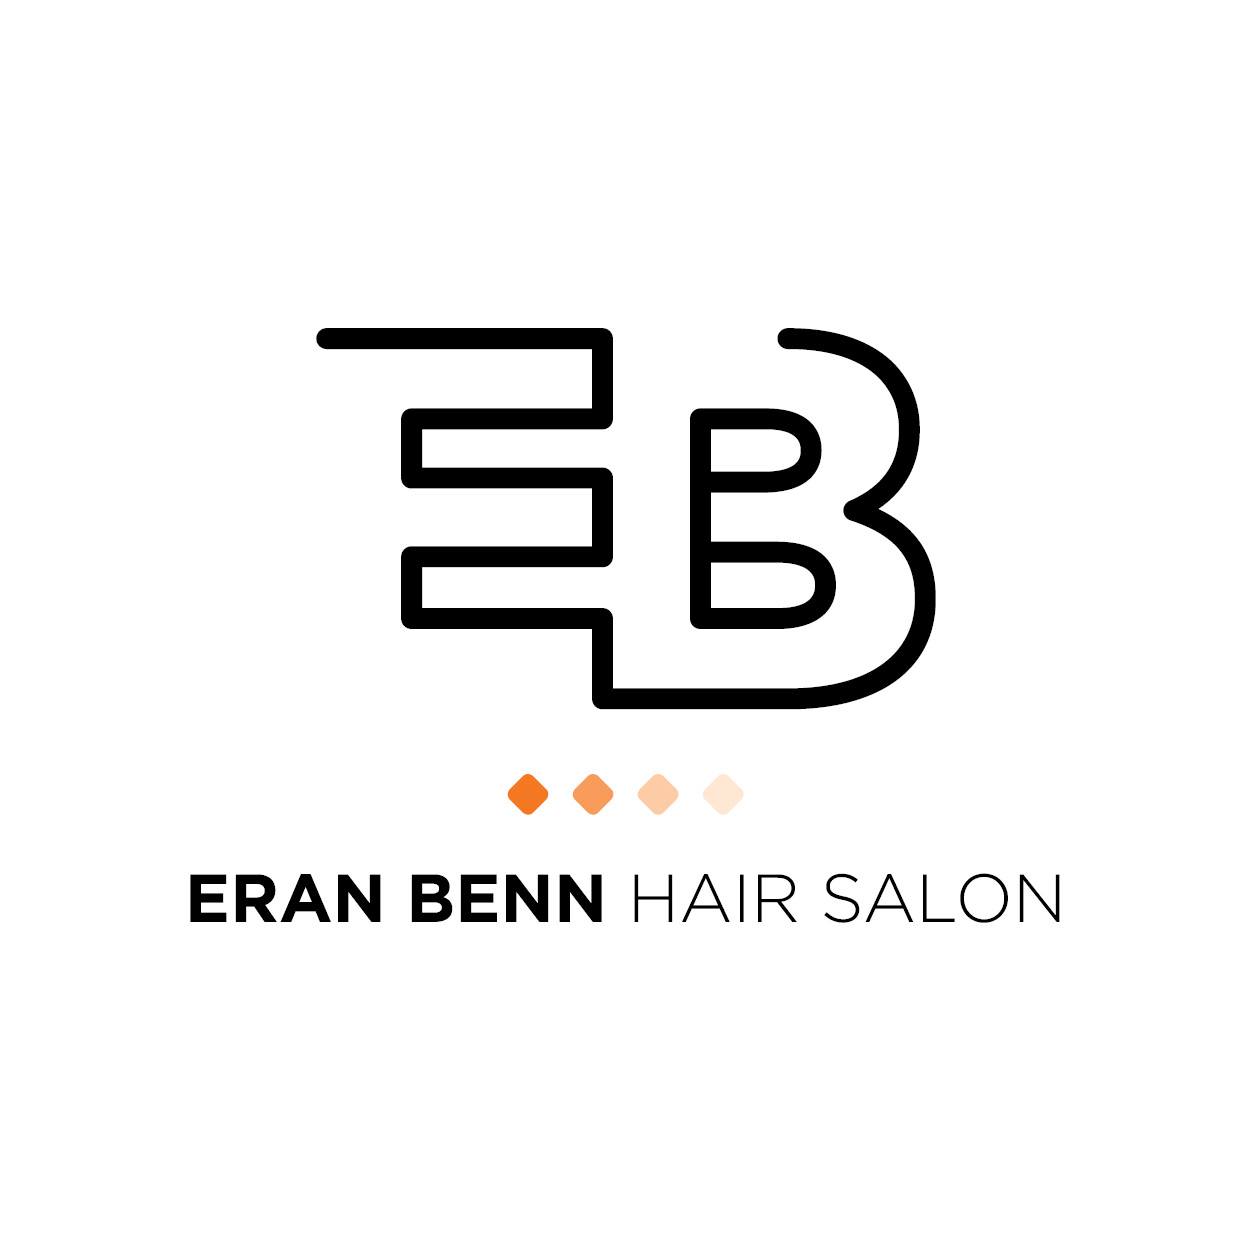 ERAN BENN HAIR SALON